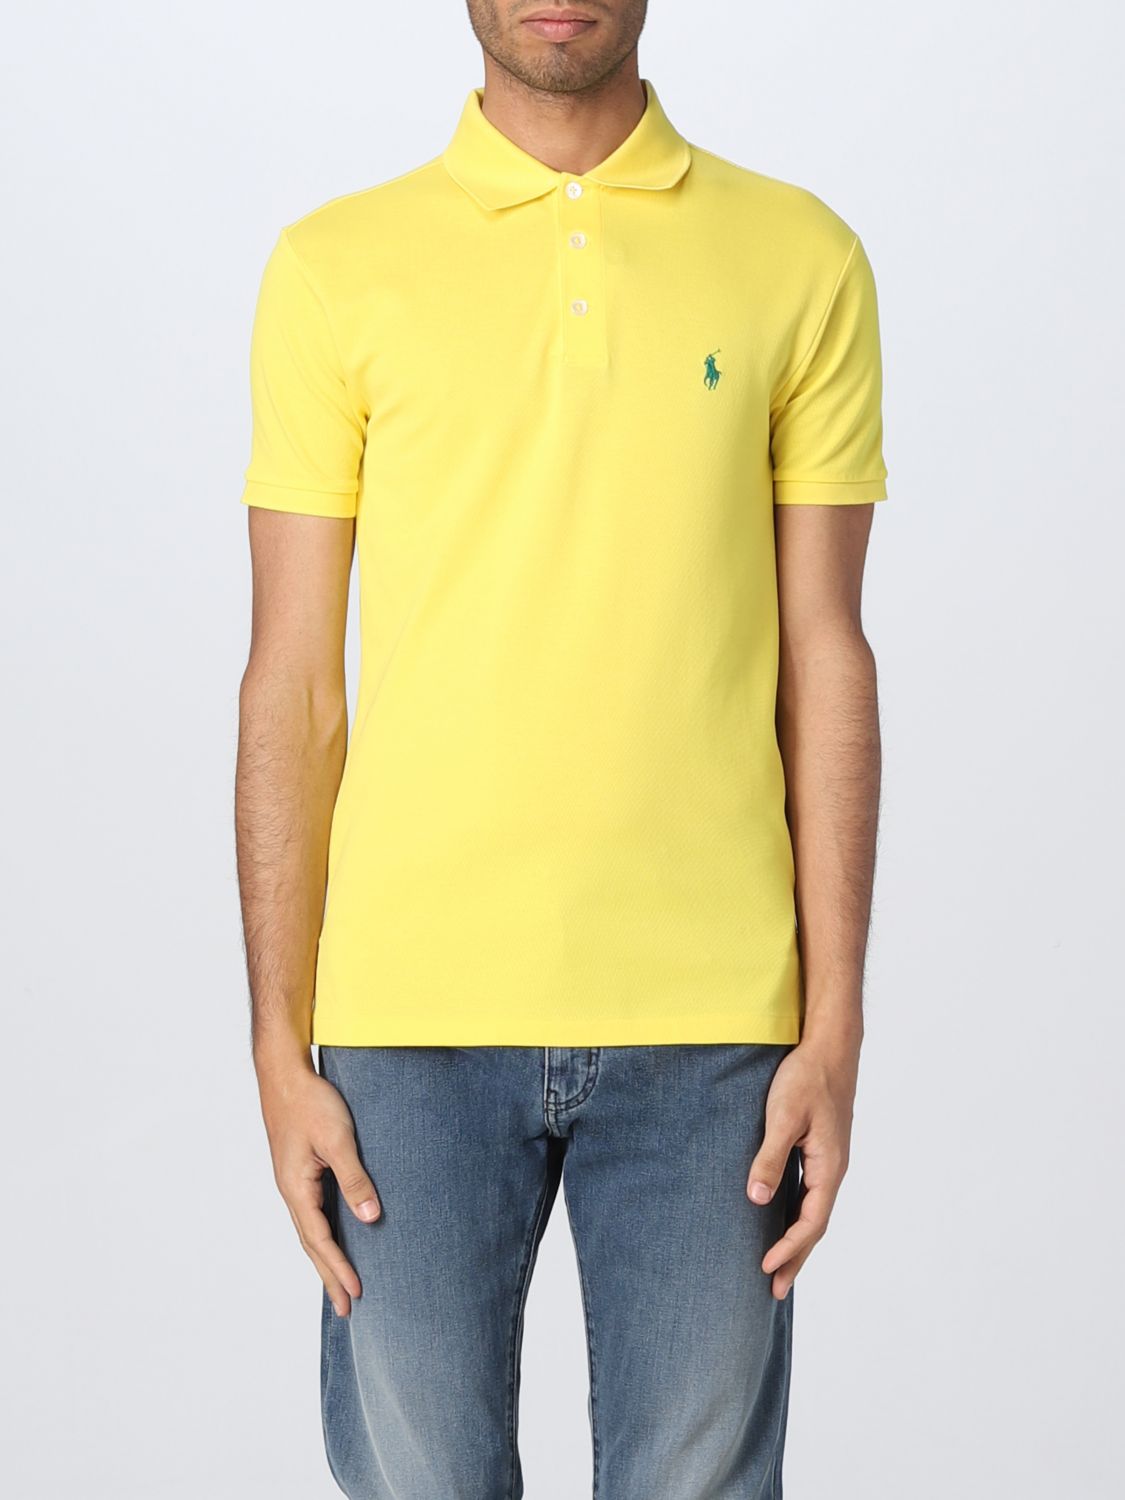 POLO RALPH LAUREN: polo shirt for man - Yellow | Polo Ralph Lauren polo ...